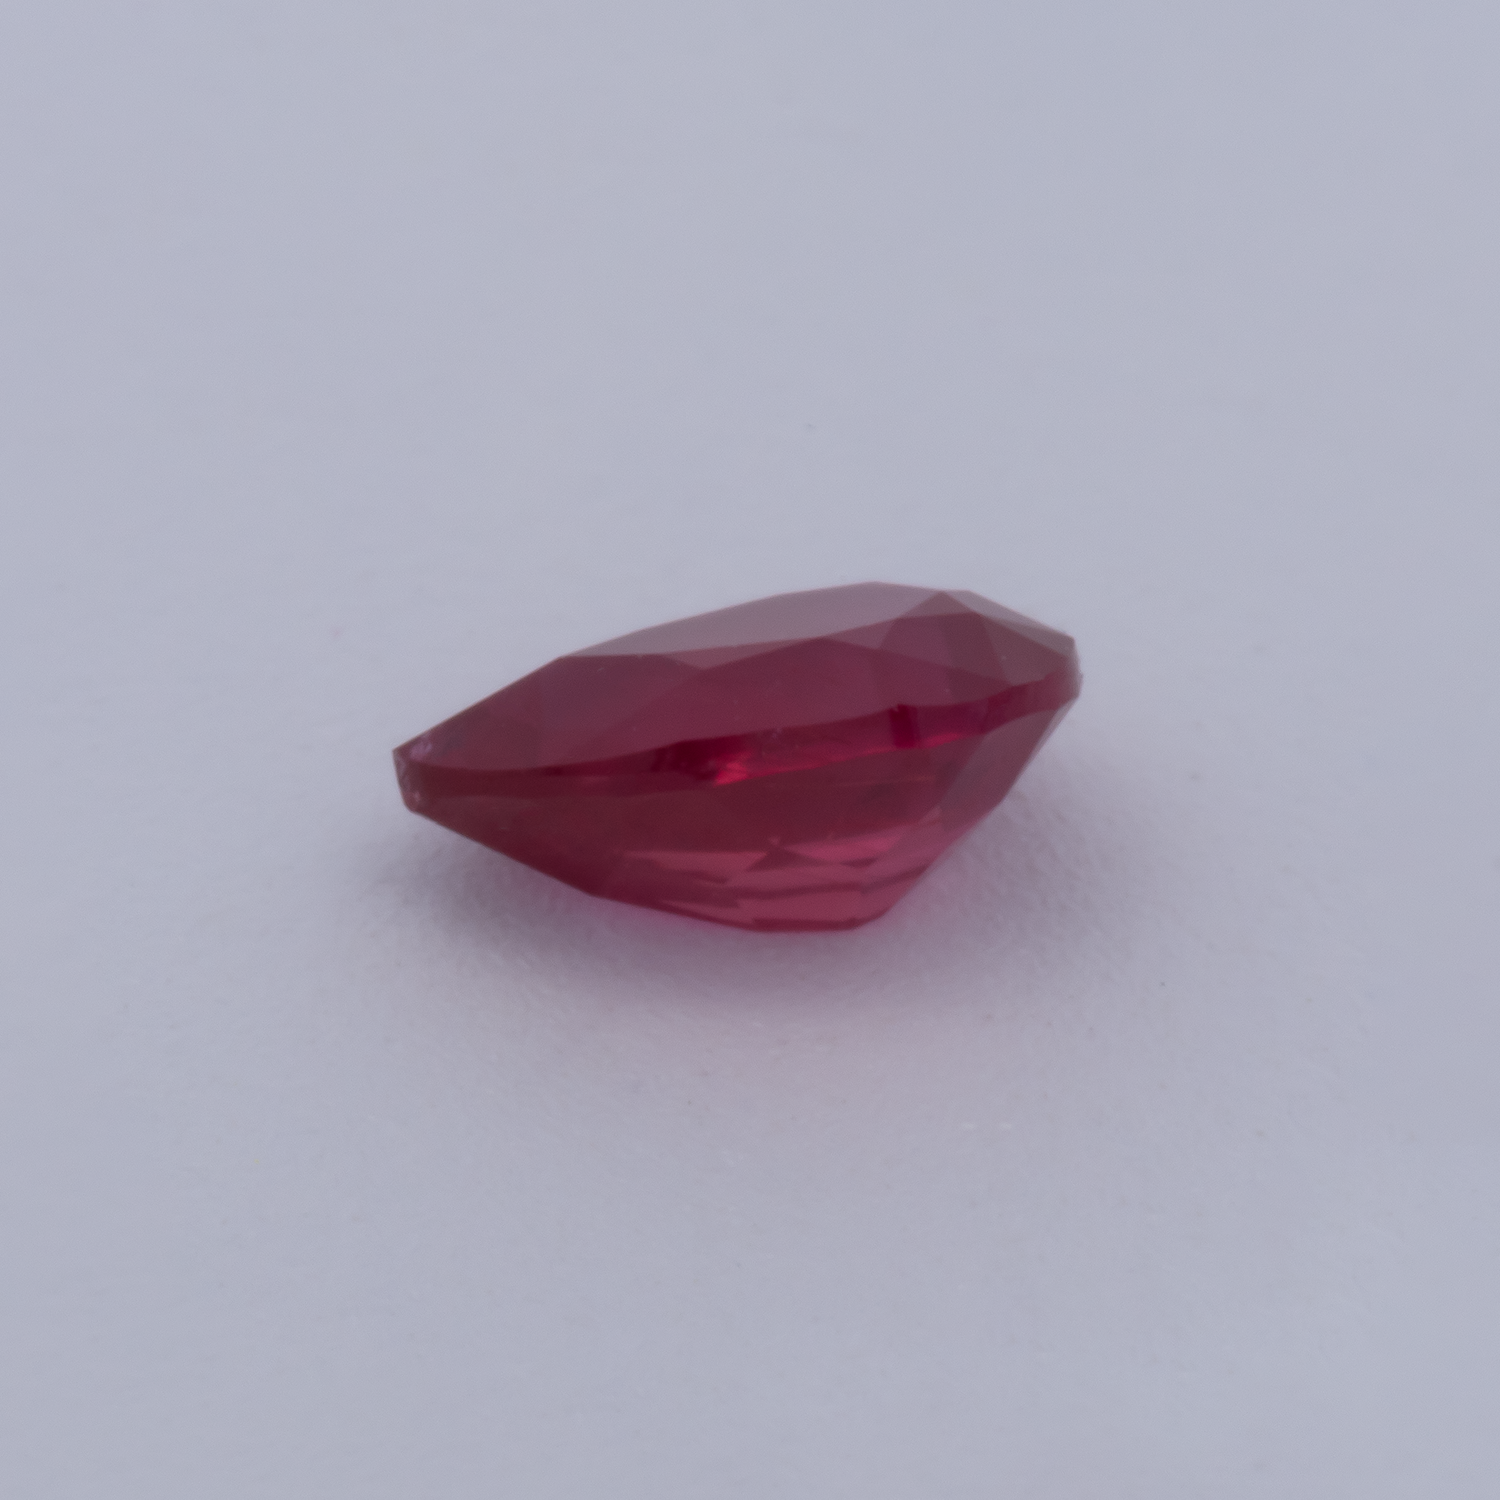 Rubin - rot, birnform, 4x3 mm, 0.18 cts, Nr. RY10021